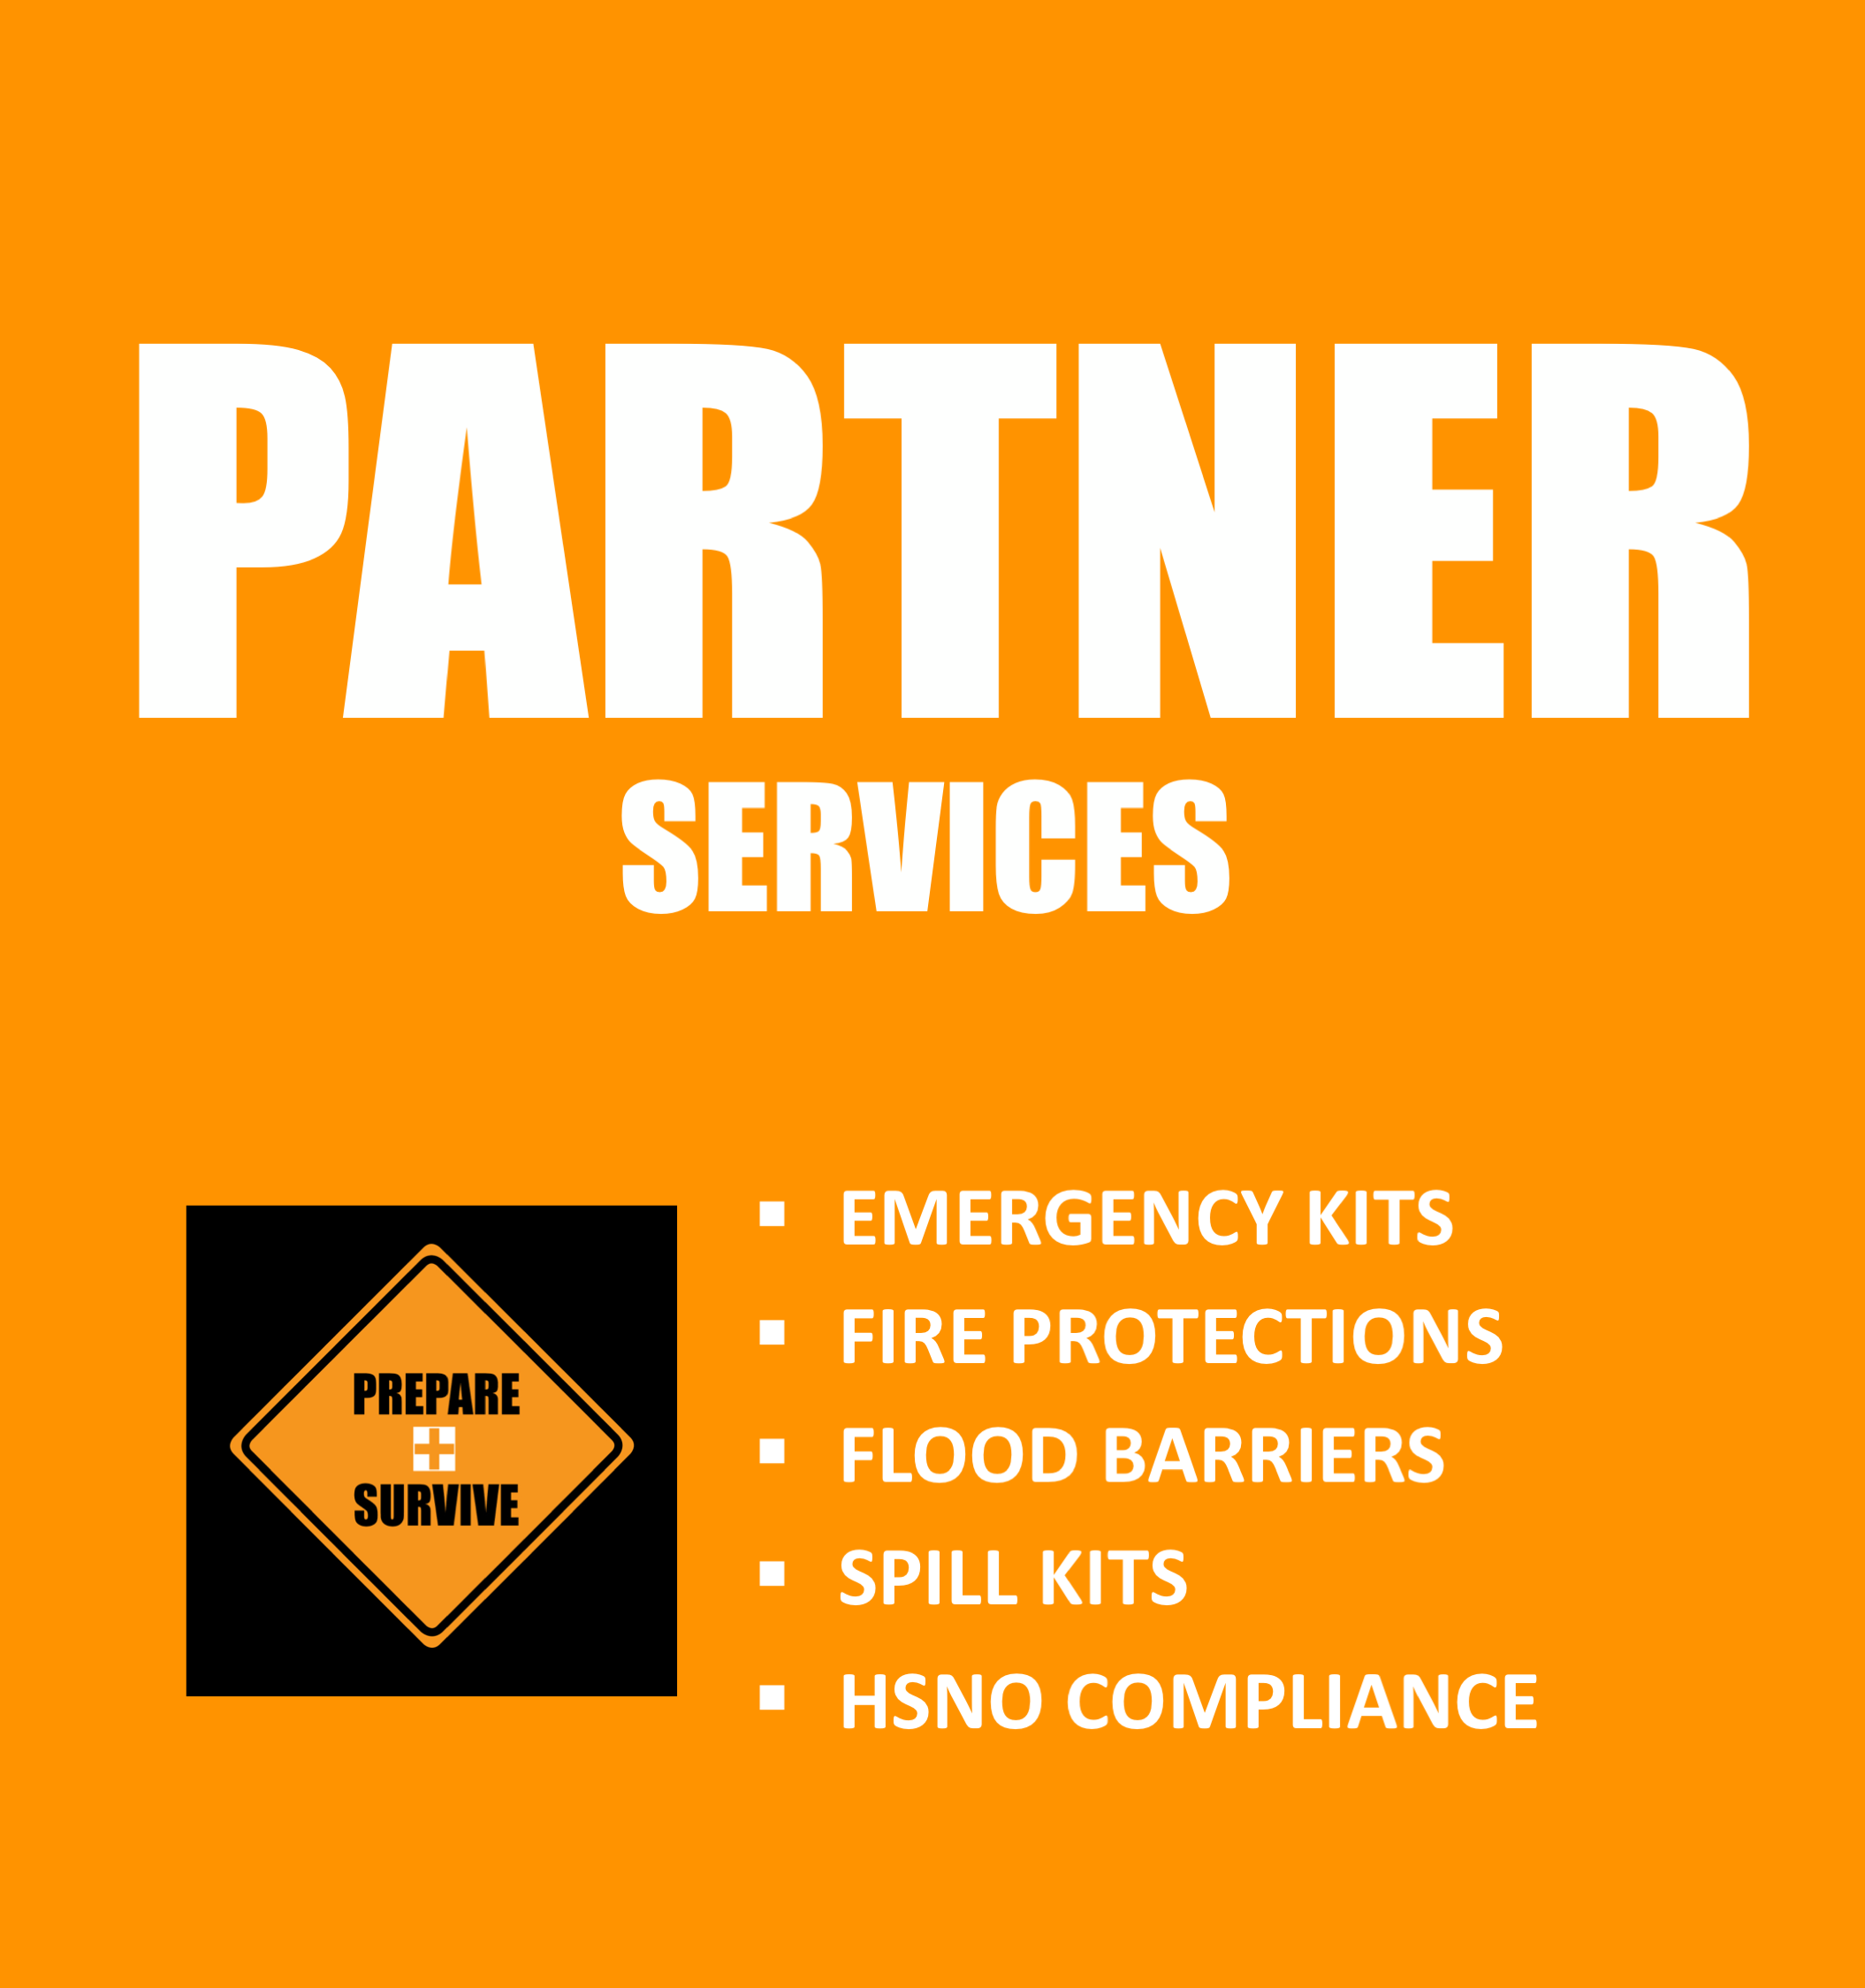 panel-partner-services.png